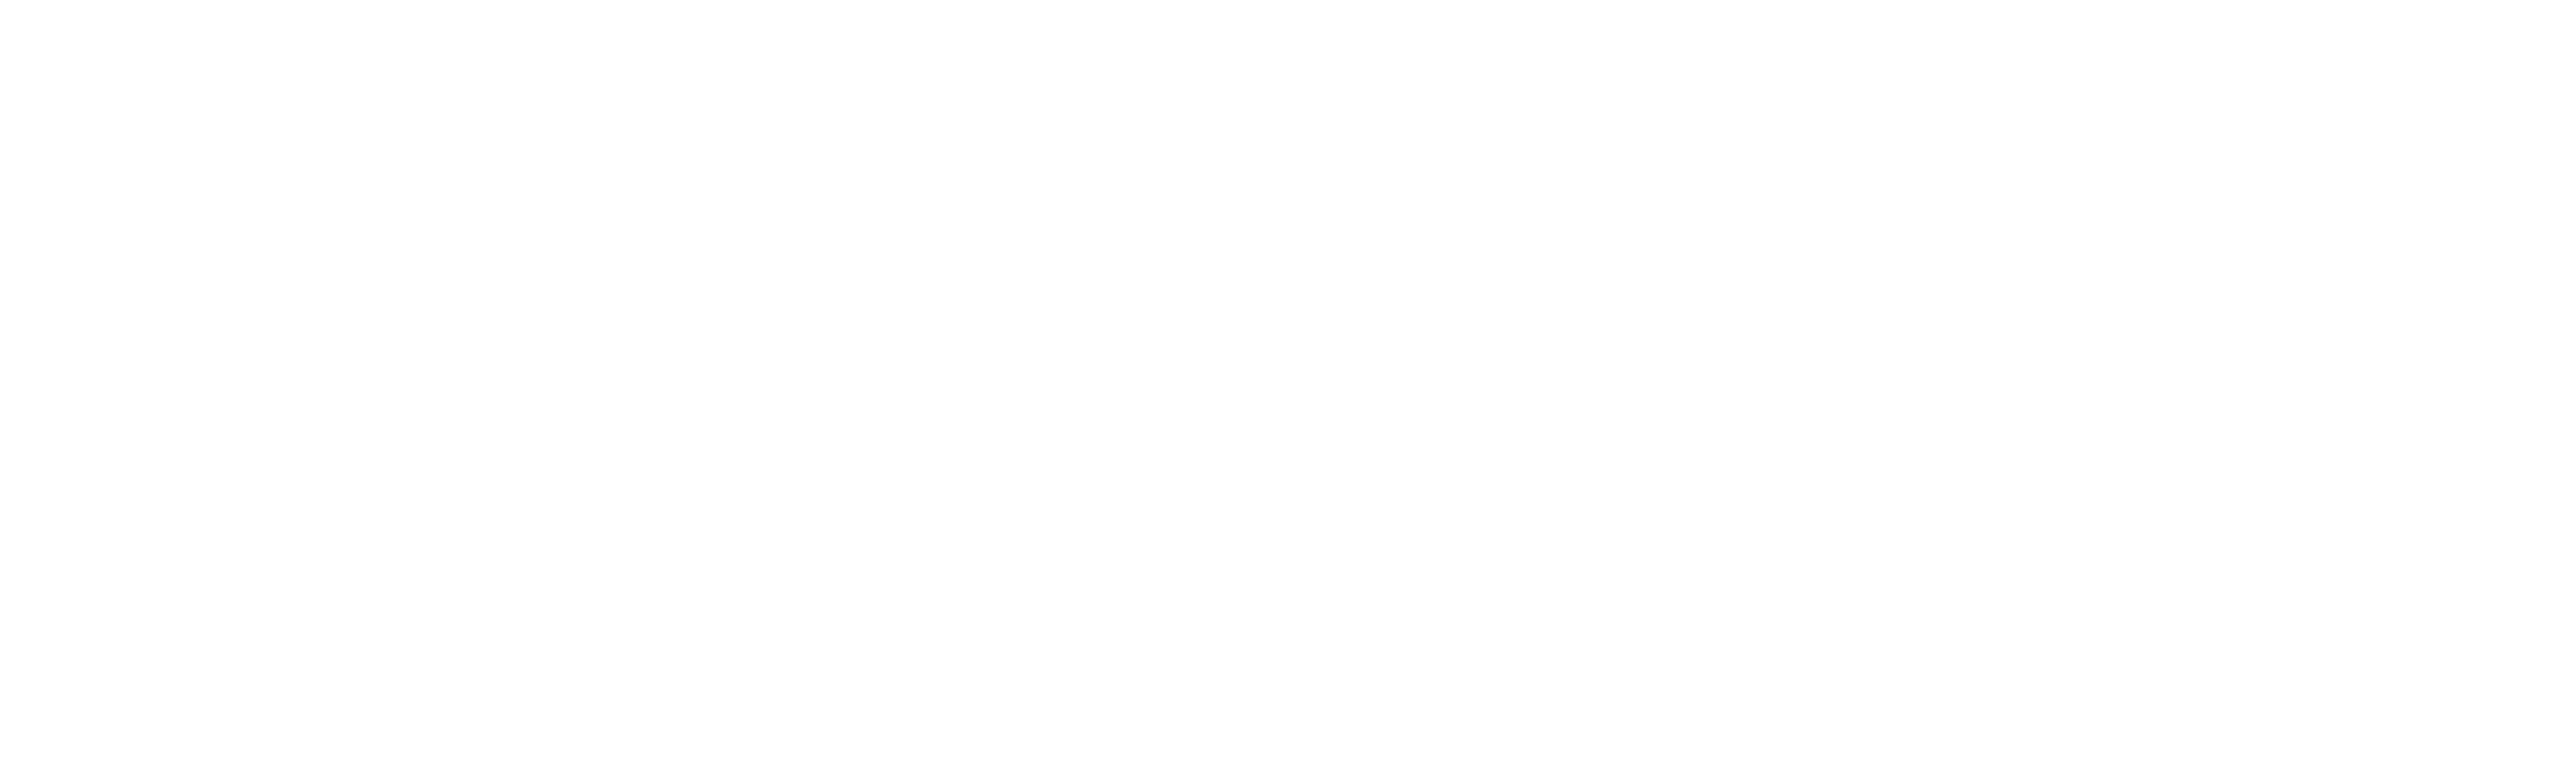 Match.com, Little Passports, Empower, coolsculpting, 1-800-pack-rat, Safe Step Walk-In Tub, Nautilus, and Mathnasium Logos